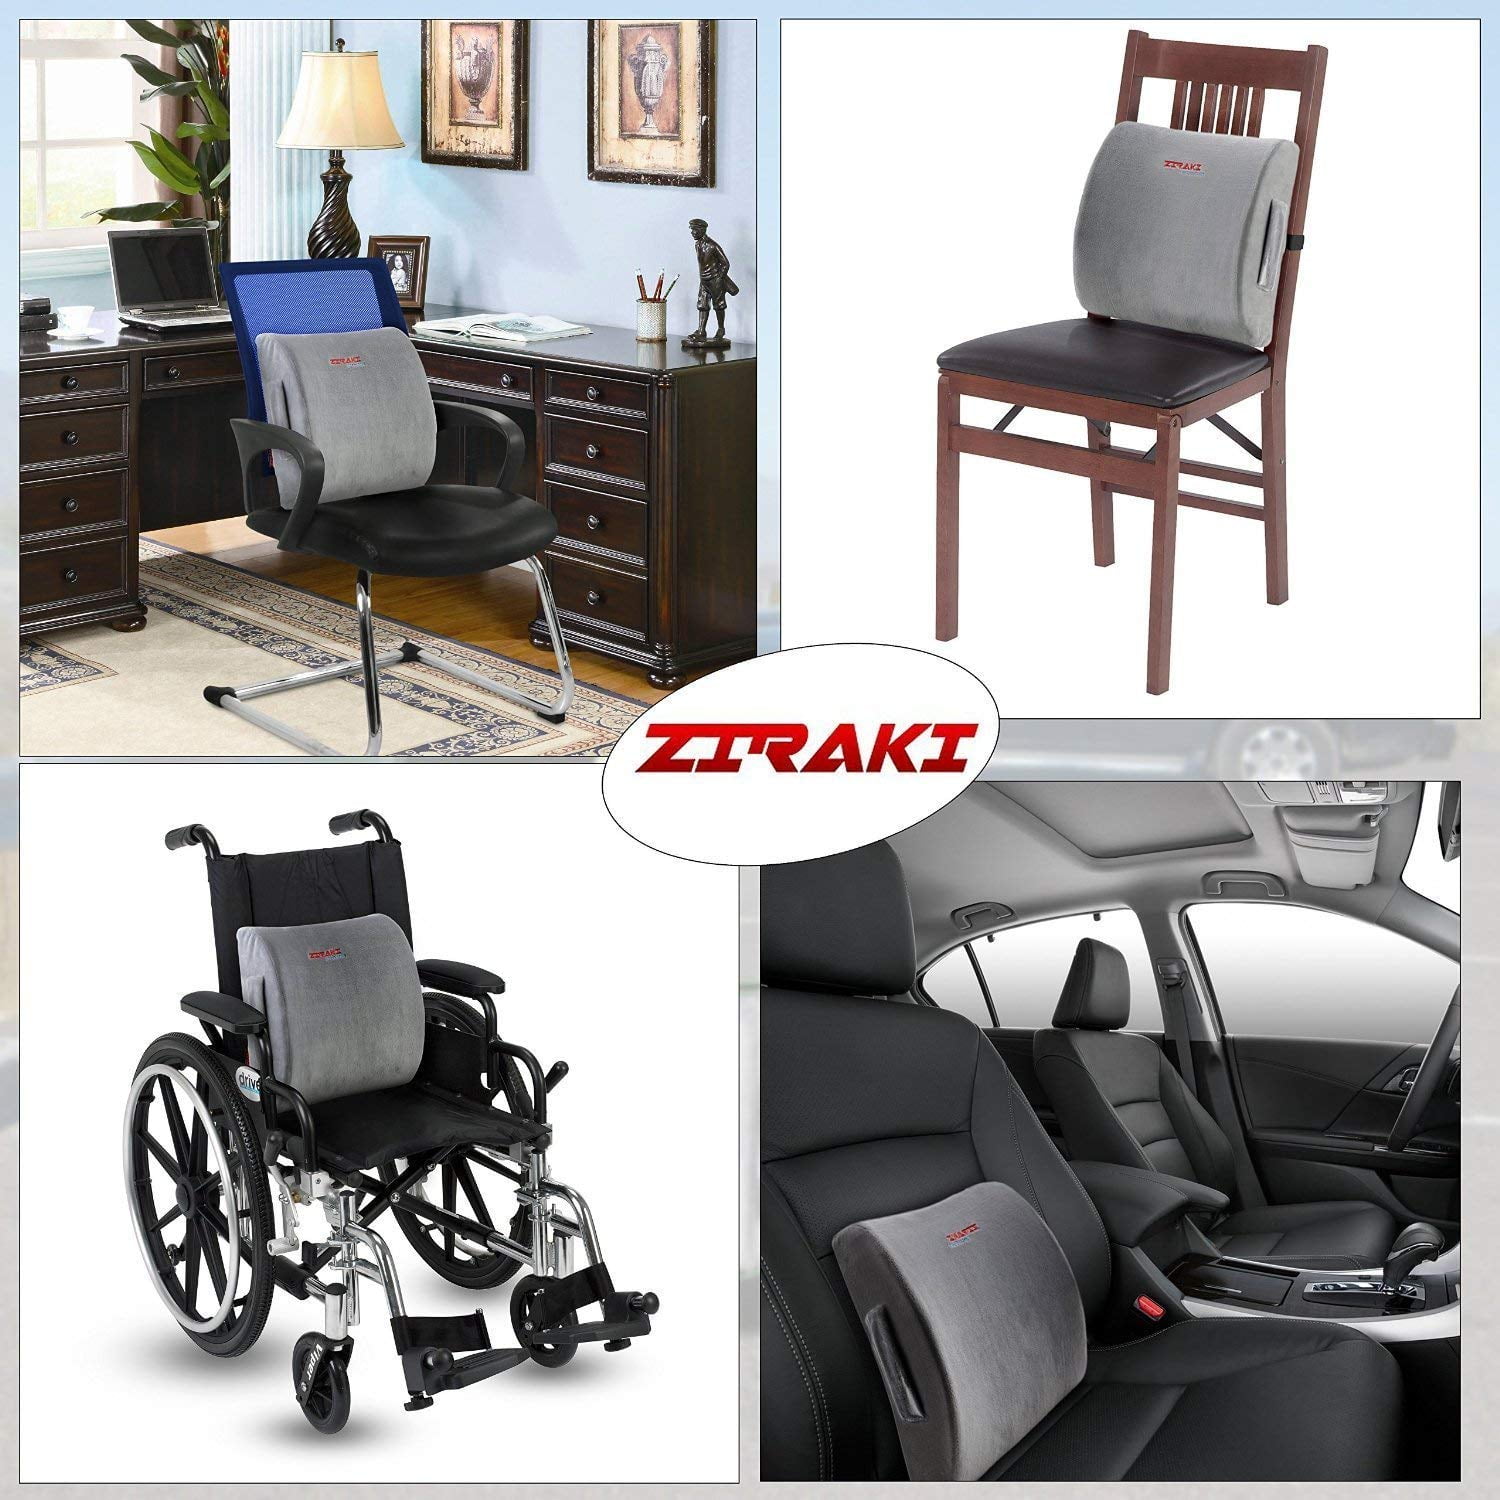 iCozyHome B7ZHKLN Coccyx Seat Cushion and Lumbar Support